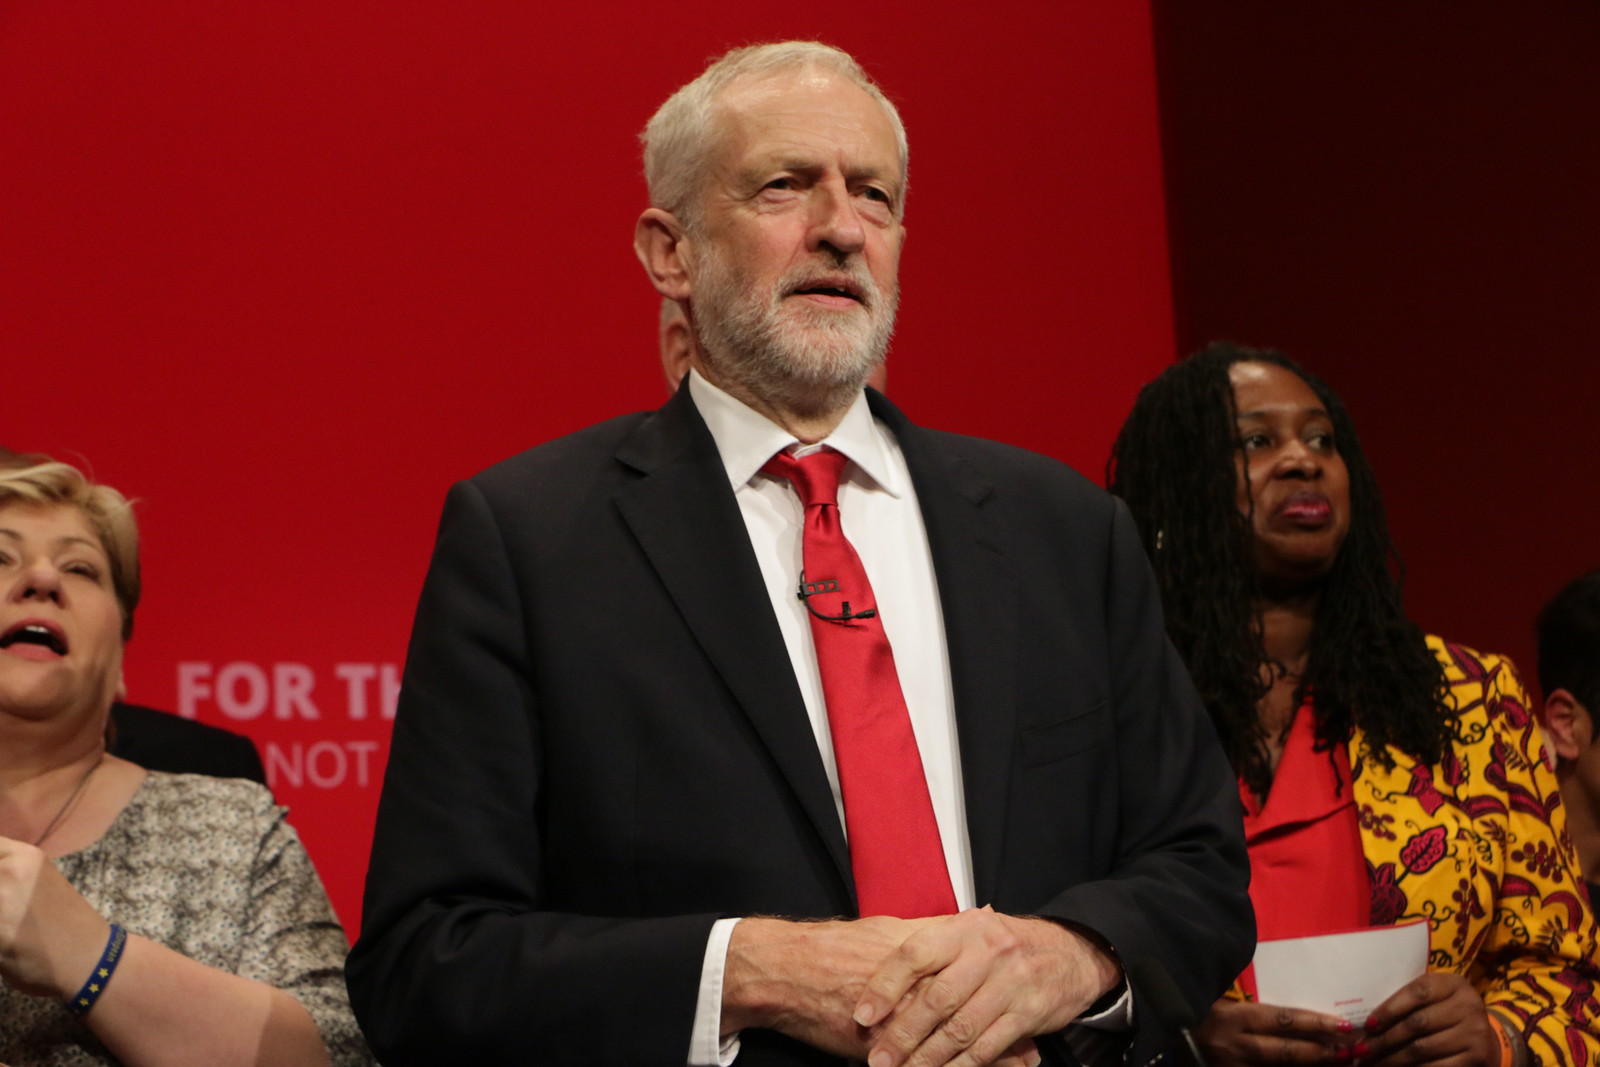 Labour Conference 2019